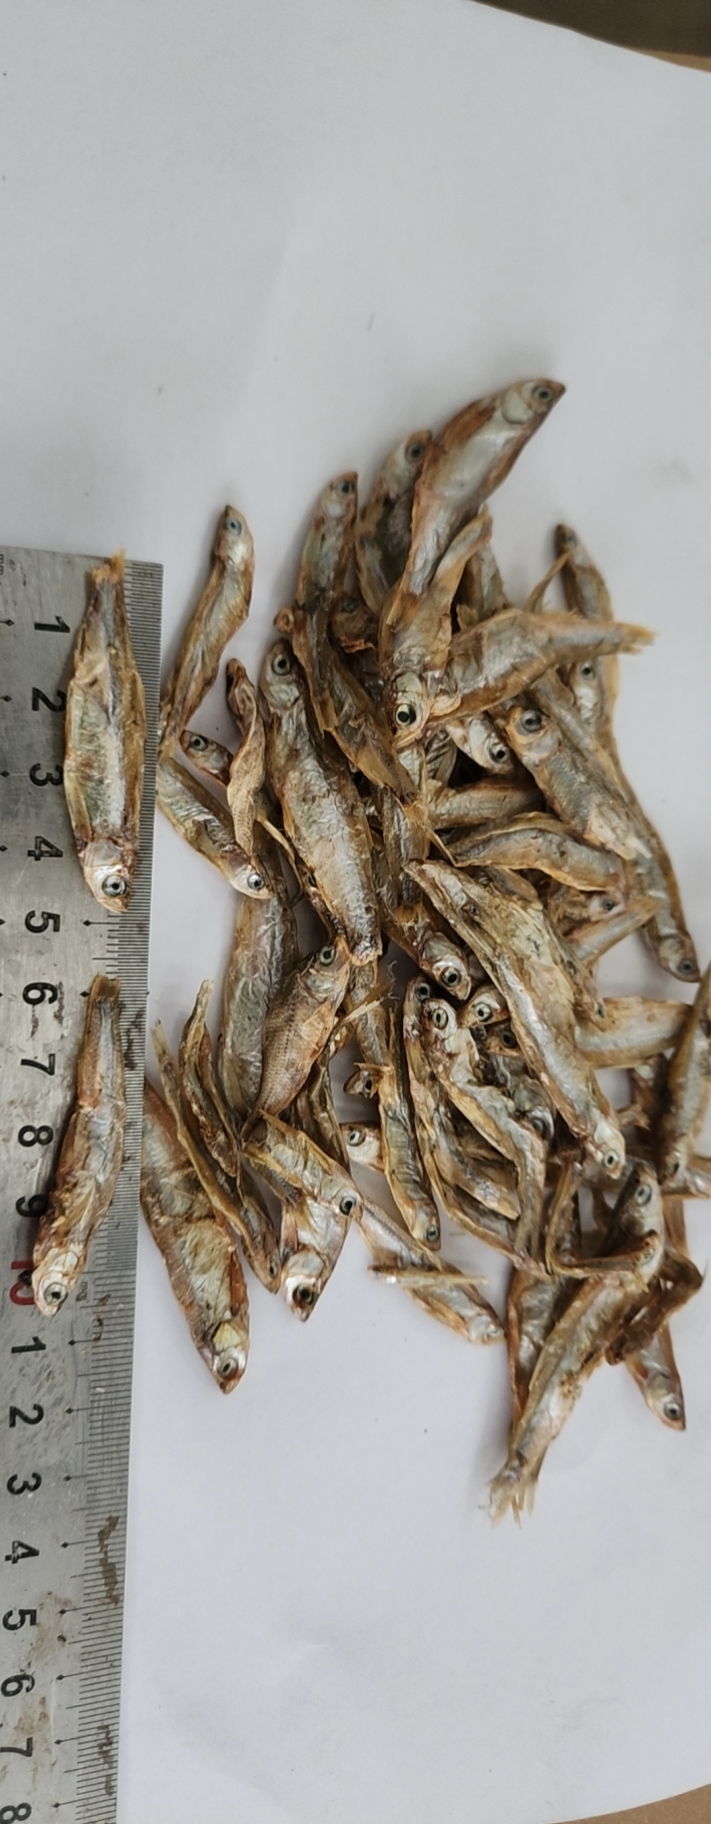 Sun dried fish 4-7cm